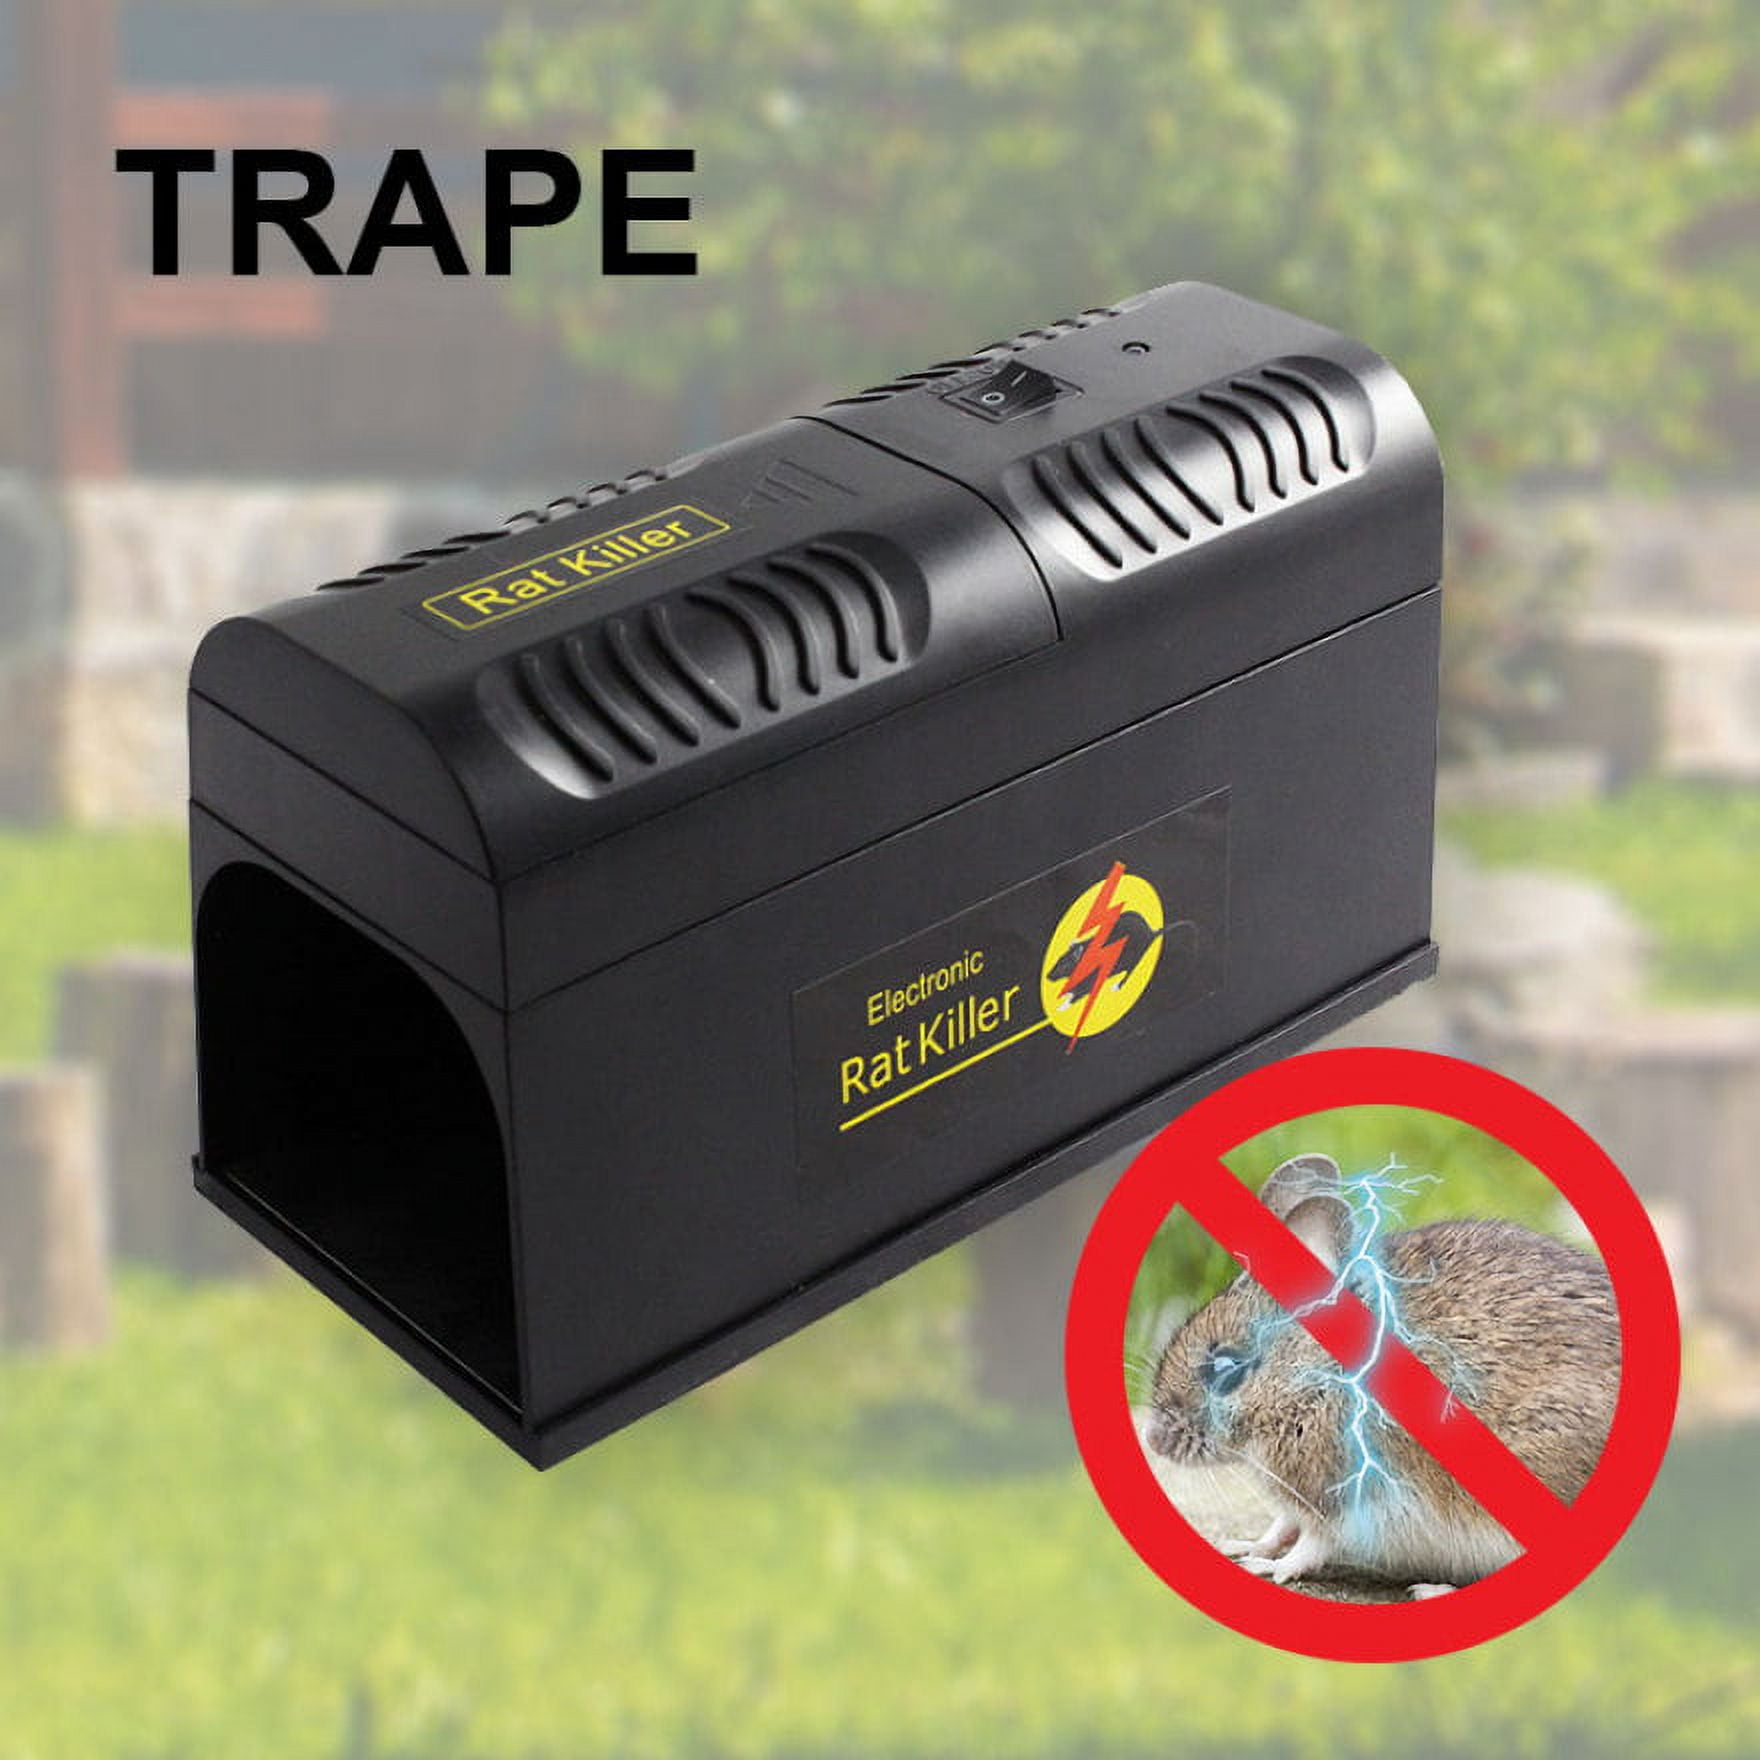 Electric Rat Trap - Electric Mouse Trap